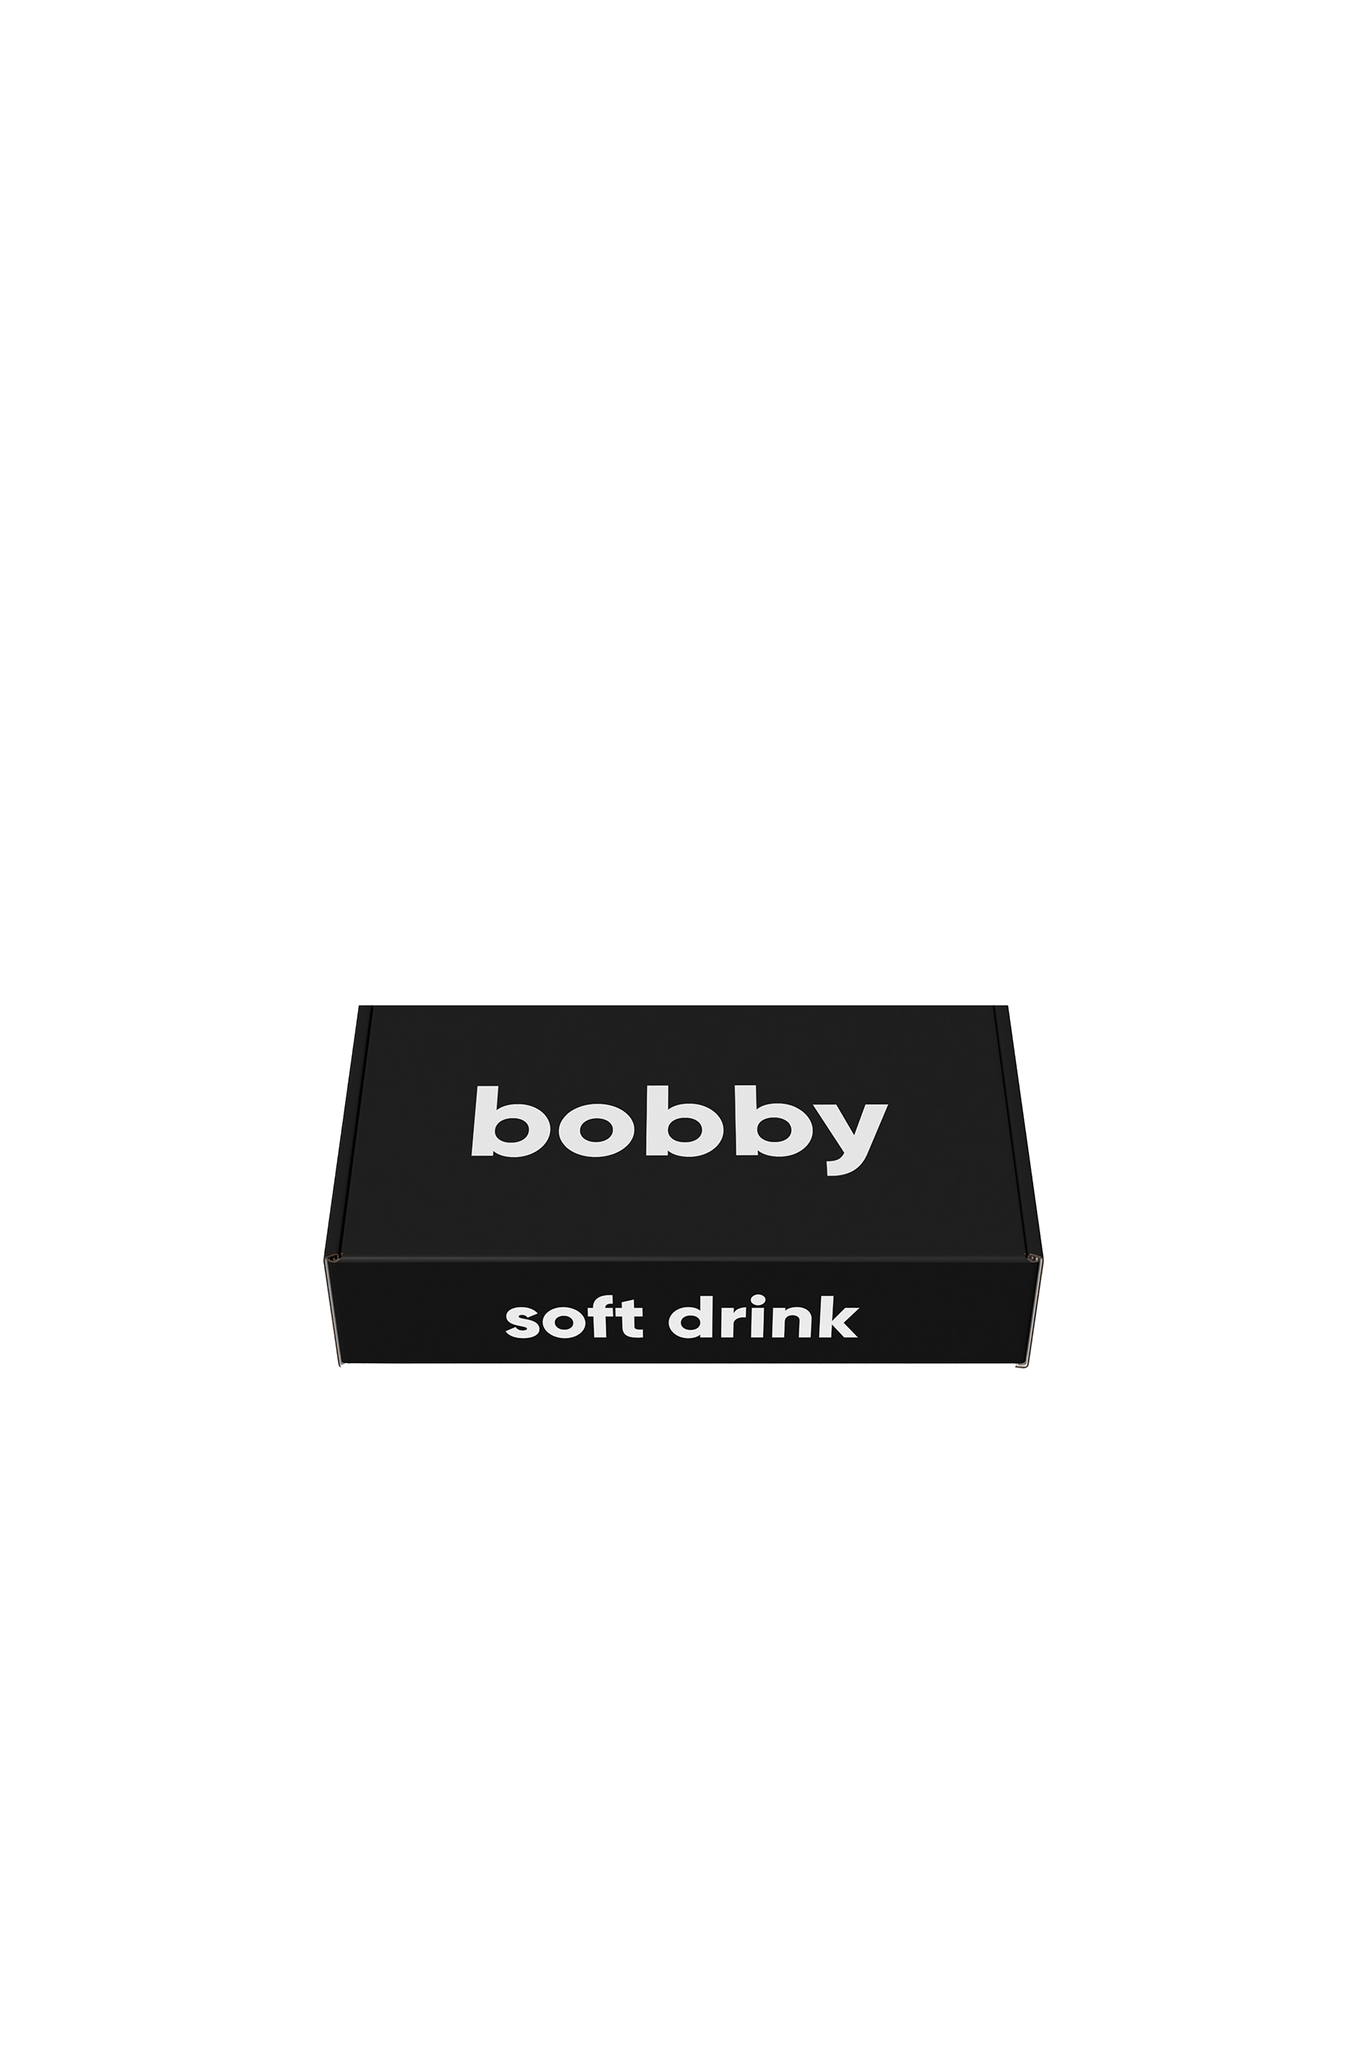 soft drink brand bobby better alternative then classic sodas like pepsi, bundaberg, coke and fanta